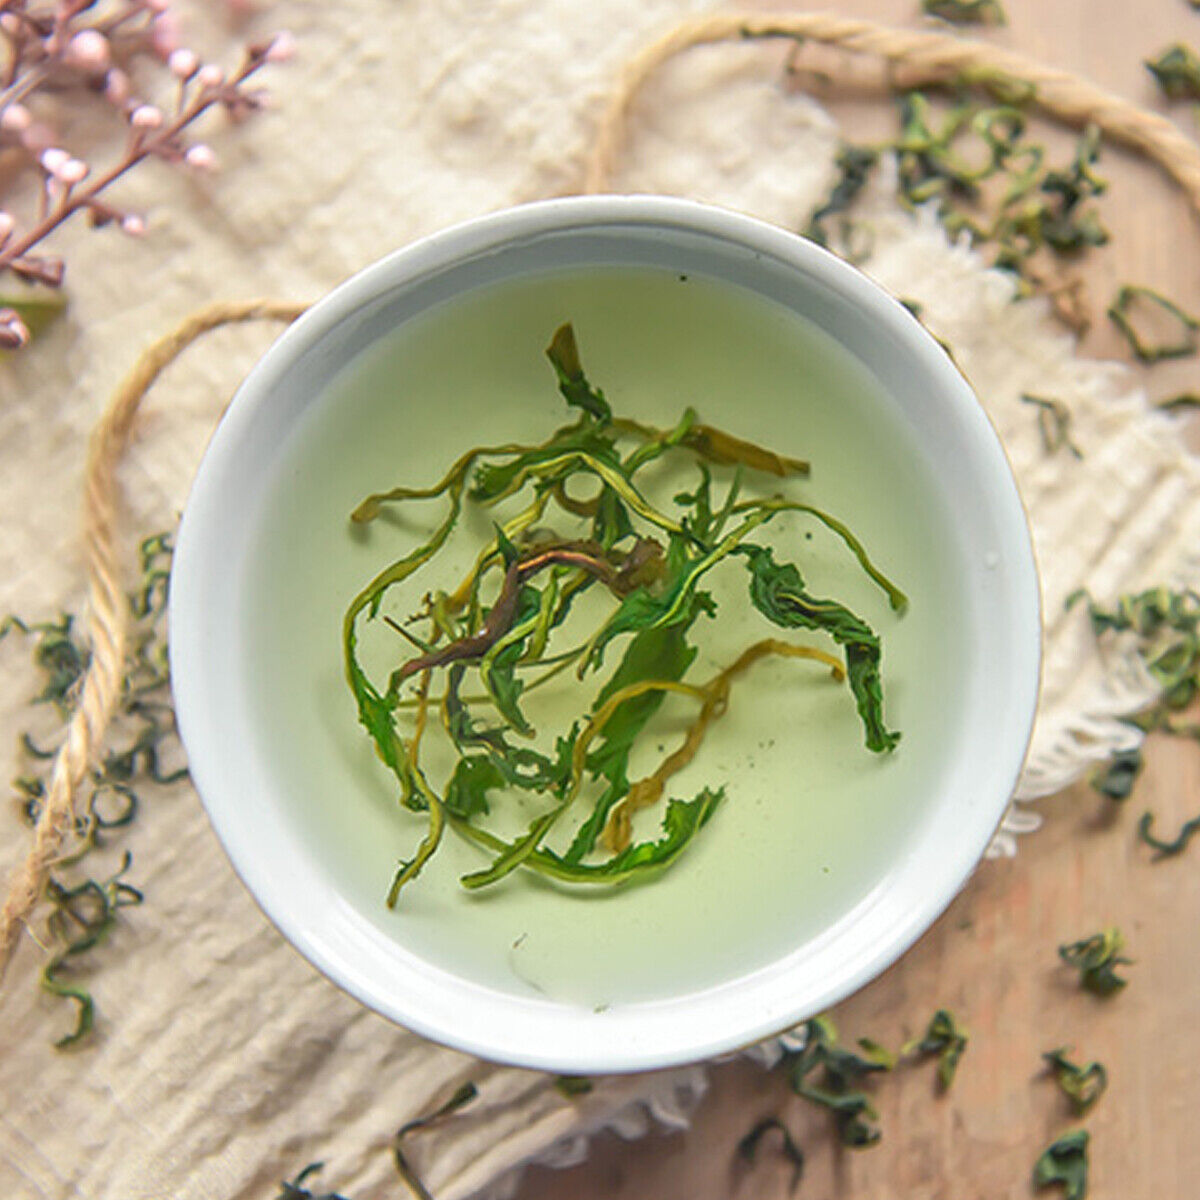 HelloYoung Dandelion Heat-clearing and Detoxifyin Natural Wild Flower Tea Dried Herbal Tea